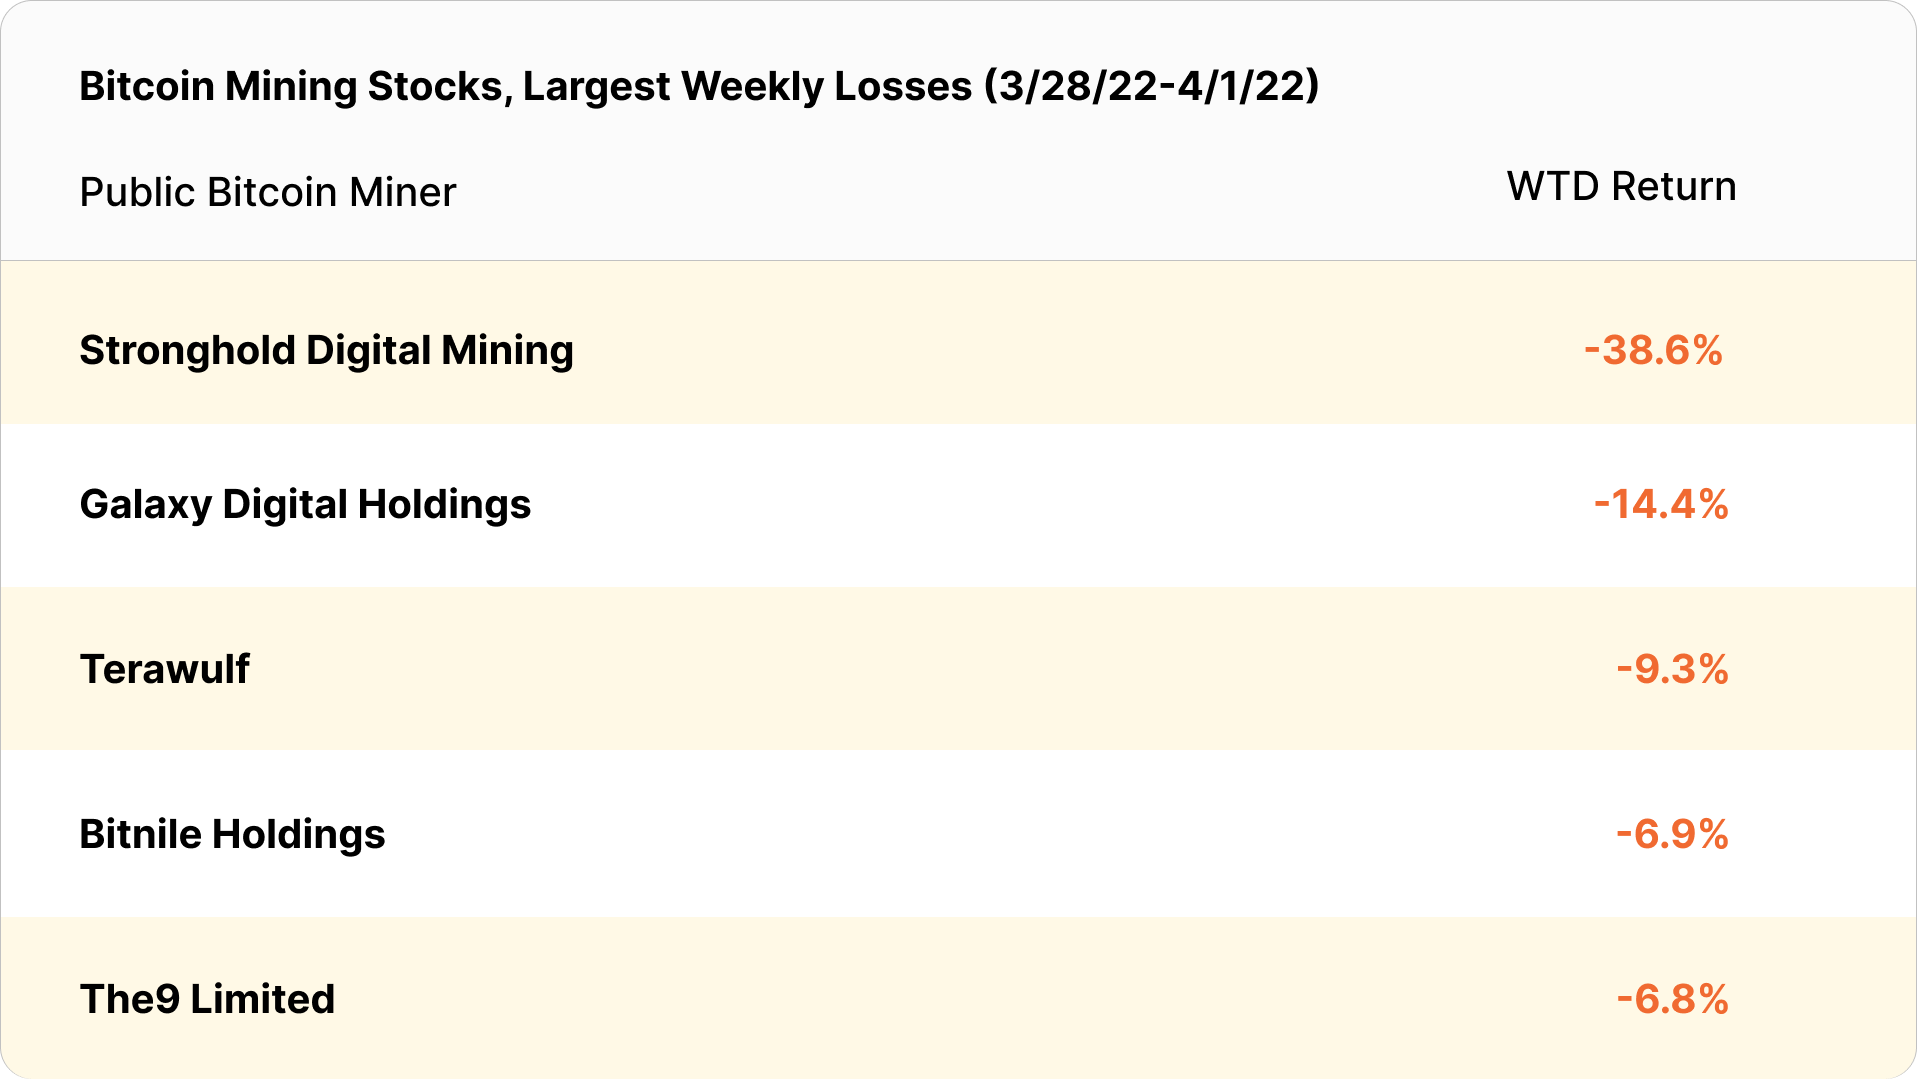 bitcoin mining stocks weekly losses (March 28 - April 1, 2022)